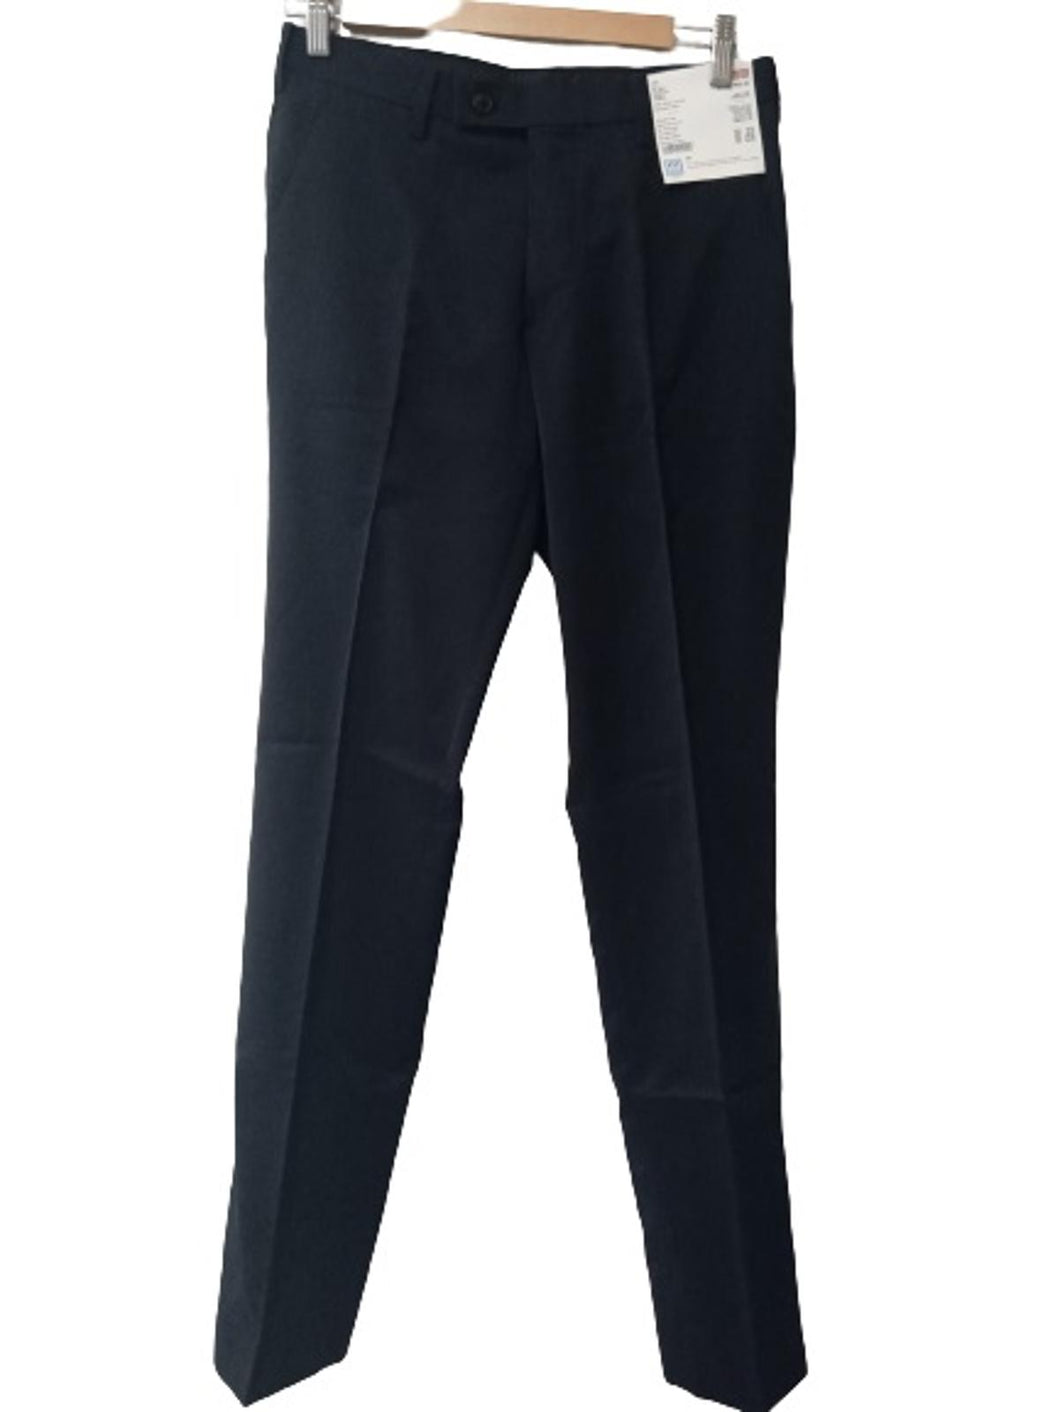 UNIQLO Men's Navy Blue Zip Fly Ultra Light Kando Trousers Size UK W29L34 NEW